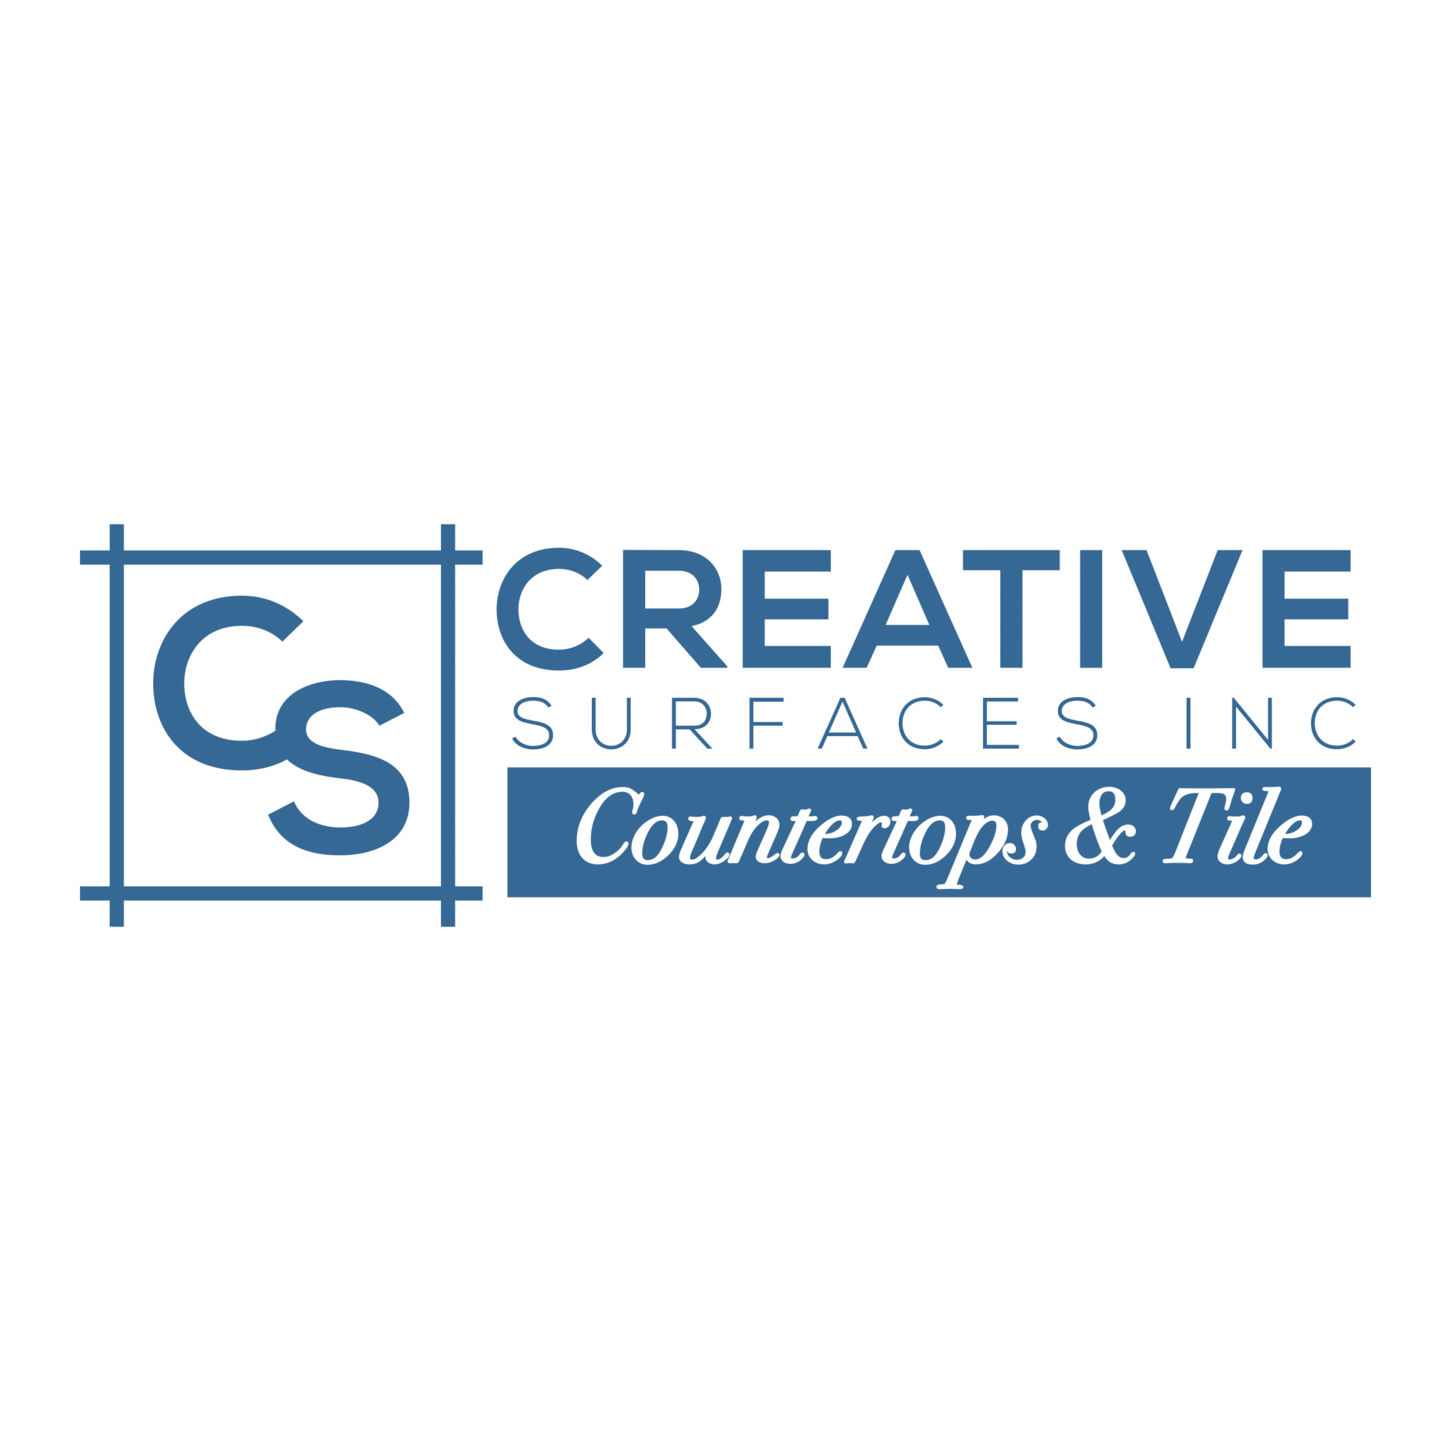 Creative Surfaces Countertops & Tile - Sioux Falls, SD 57108 - (605)362-5853 | ShowMeLocal.com